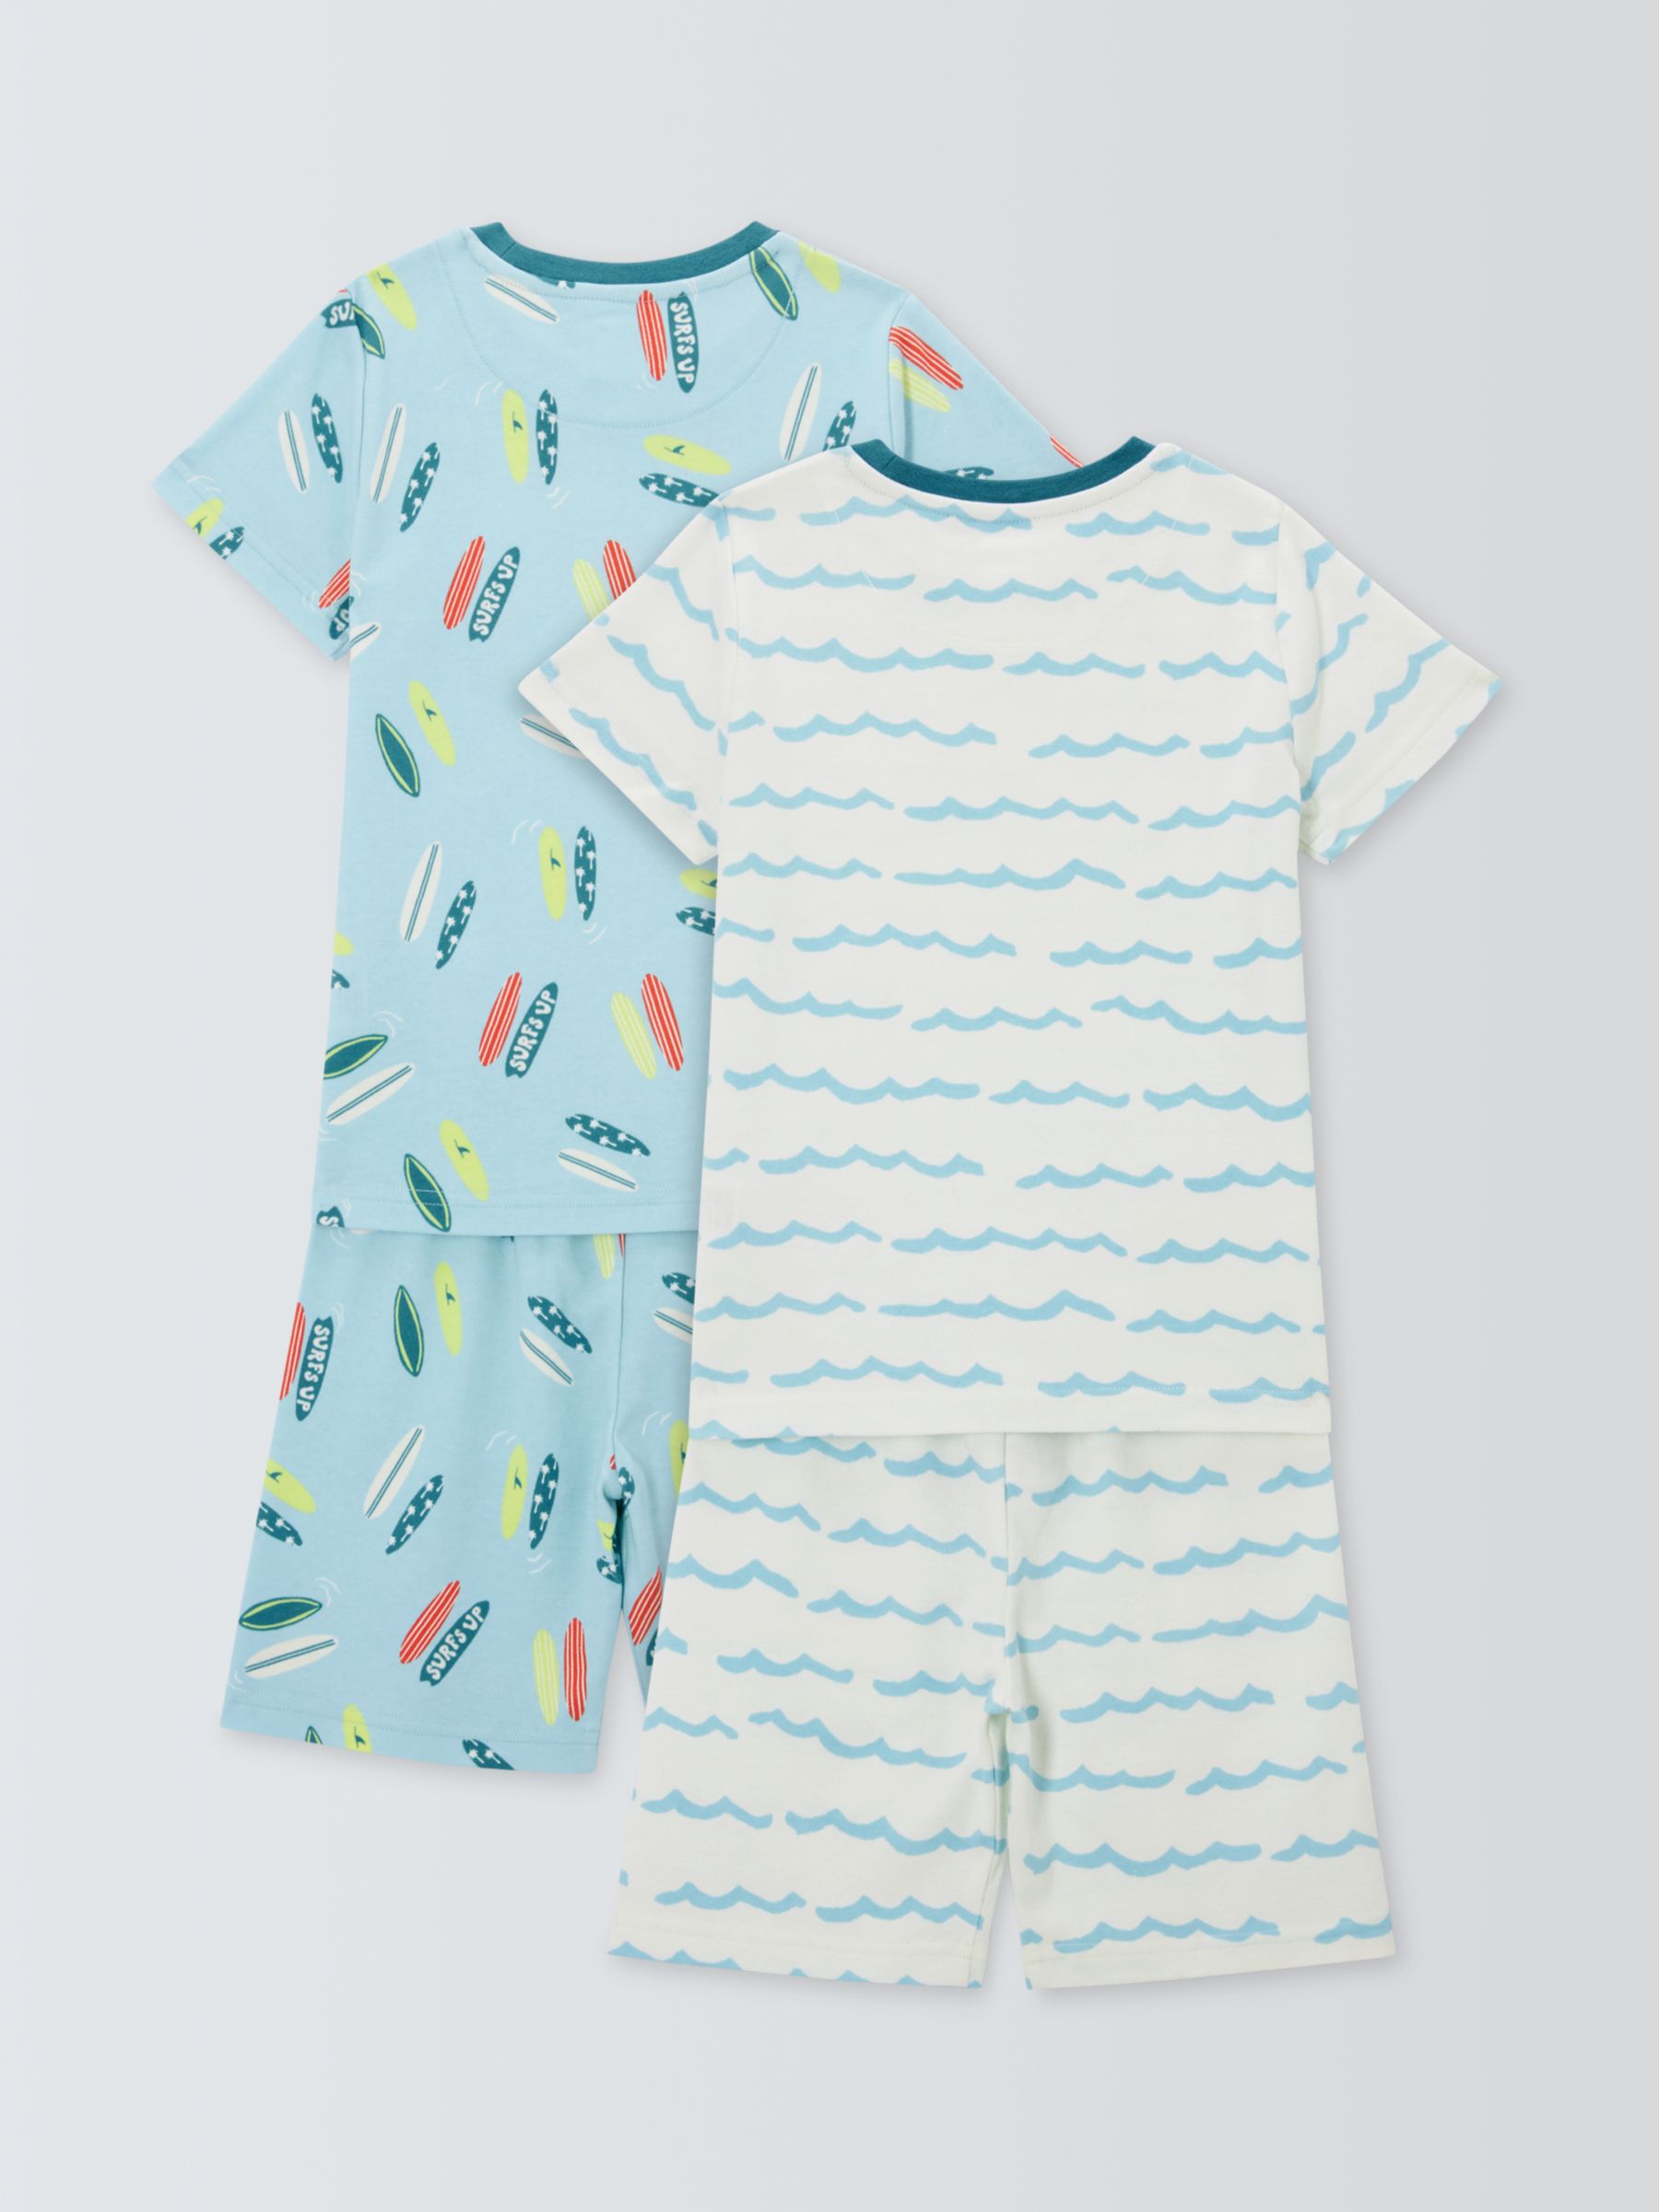 Buy John Lewis Kids' Surf Print Shorts Pyjamas, Pack of 2, Blue/Multi Online at johnlewis.com